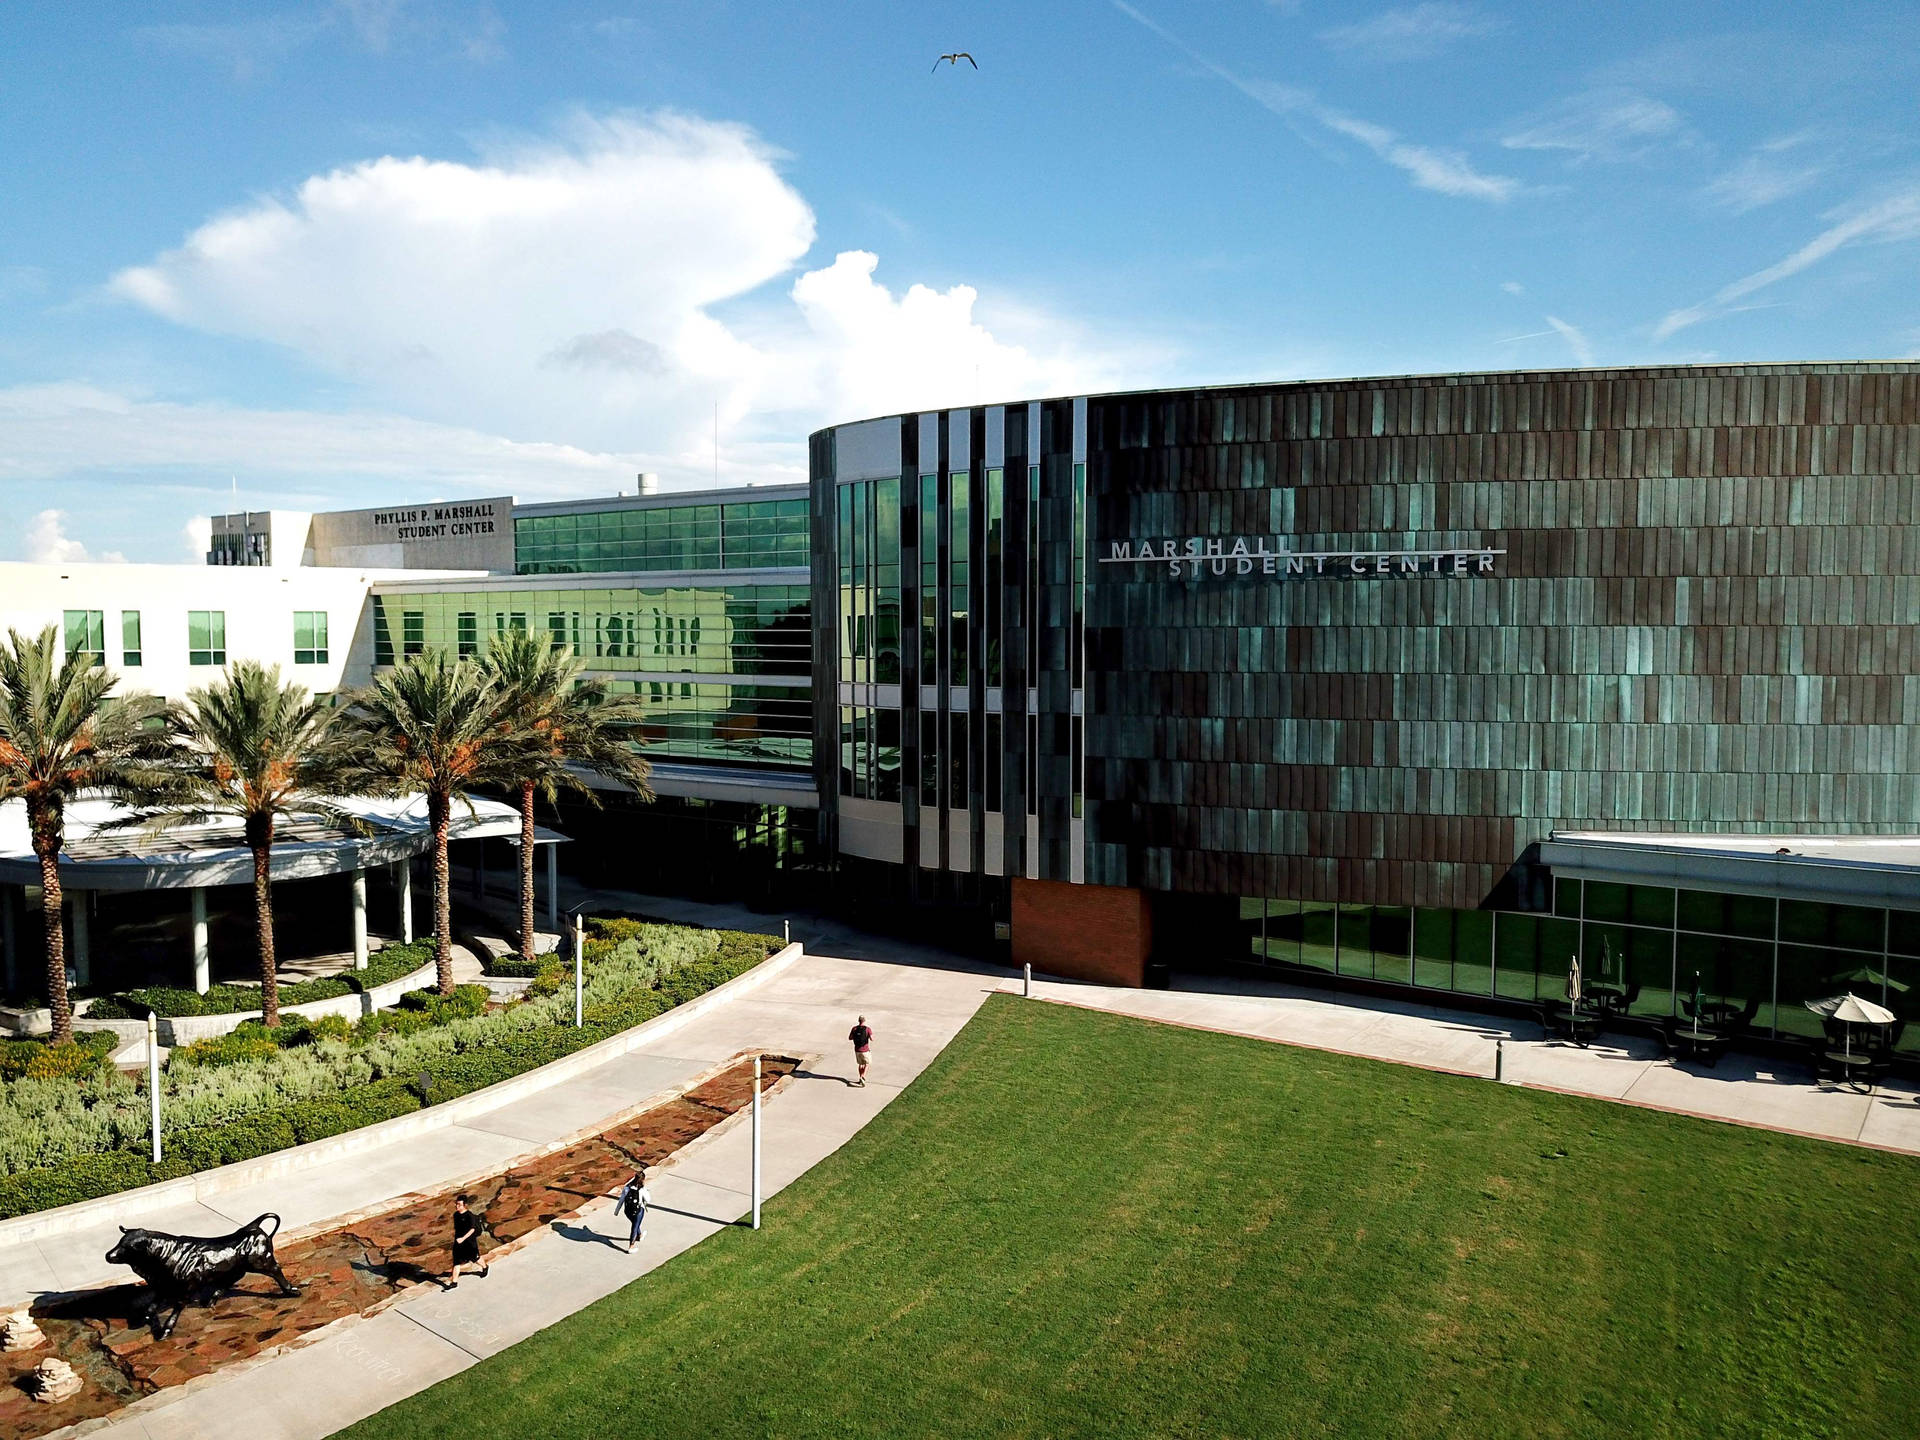 Caption: University of South Florida's Landmark - Marshall Student Center Wallpaper